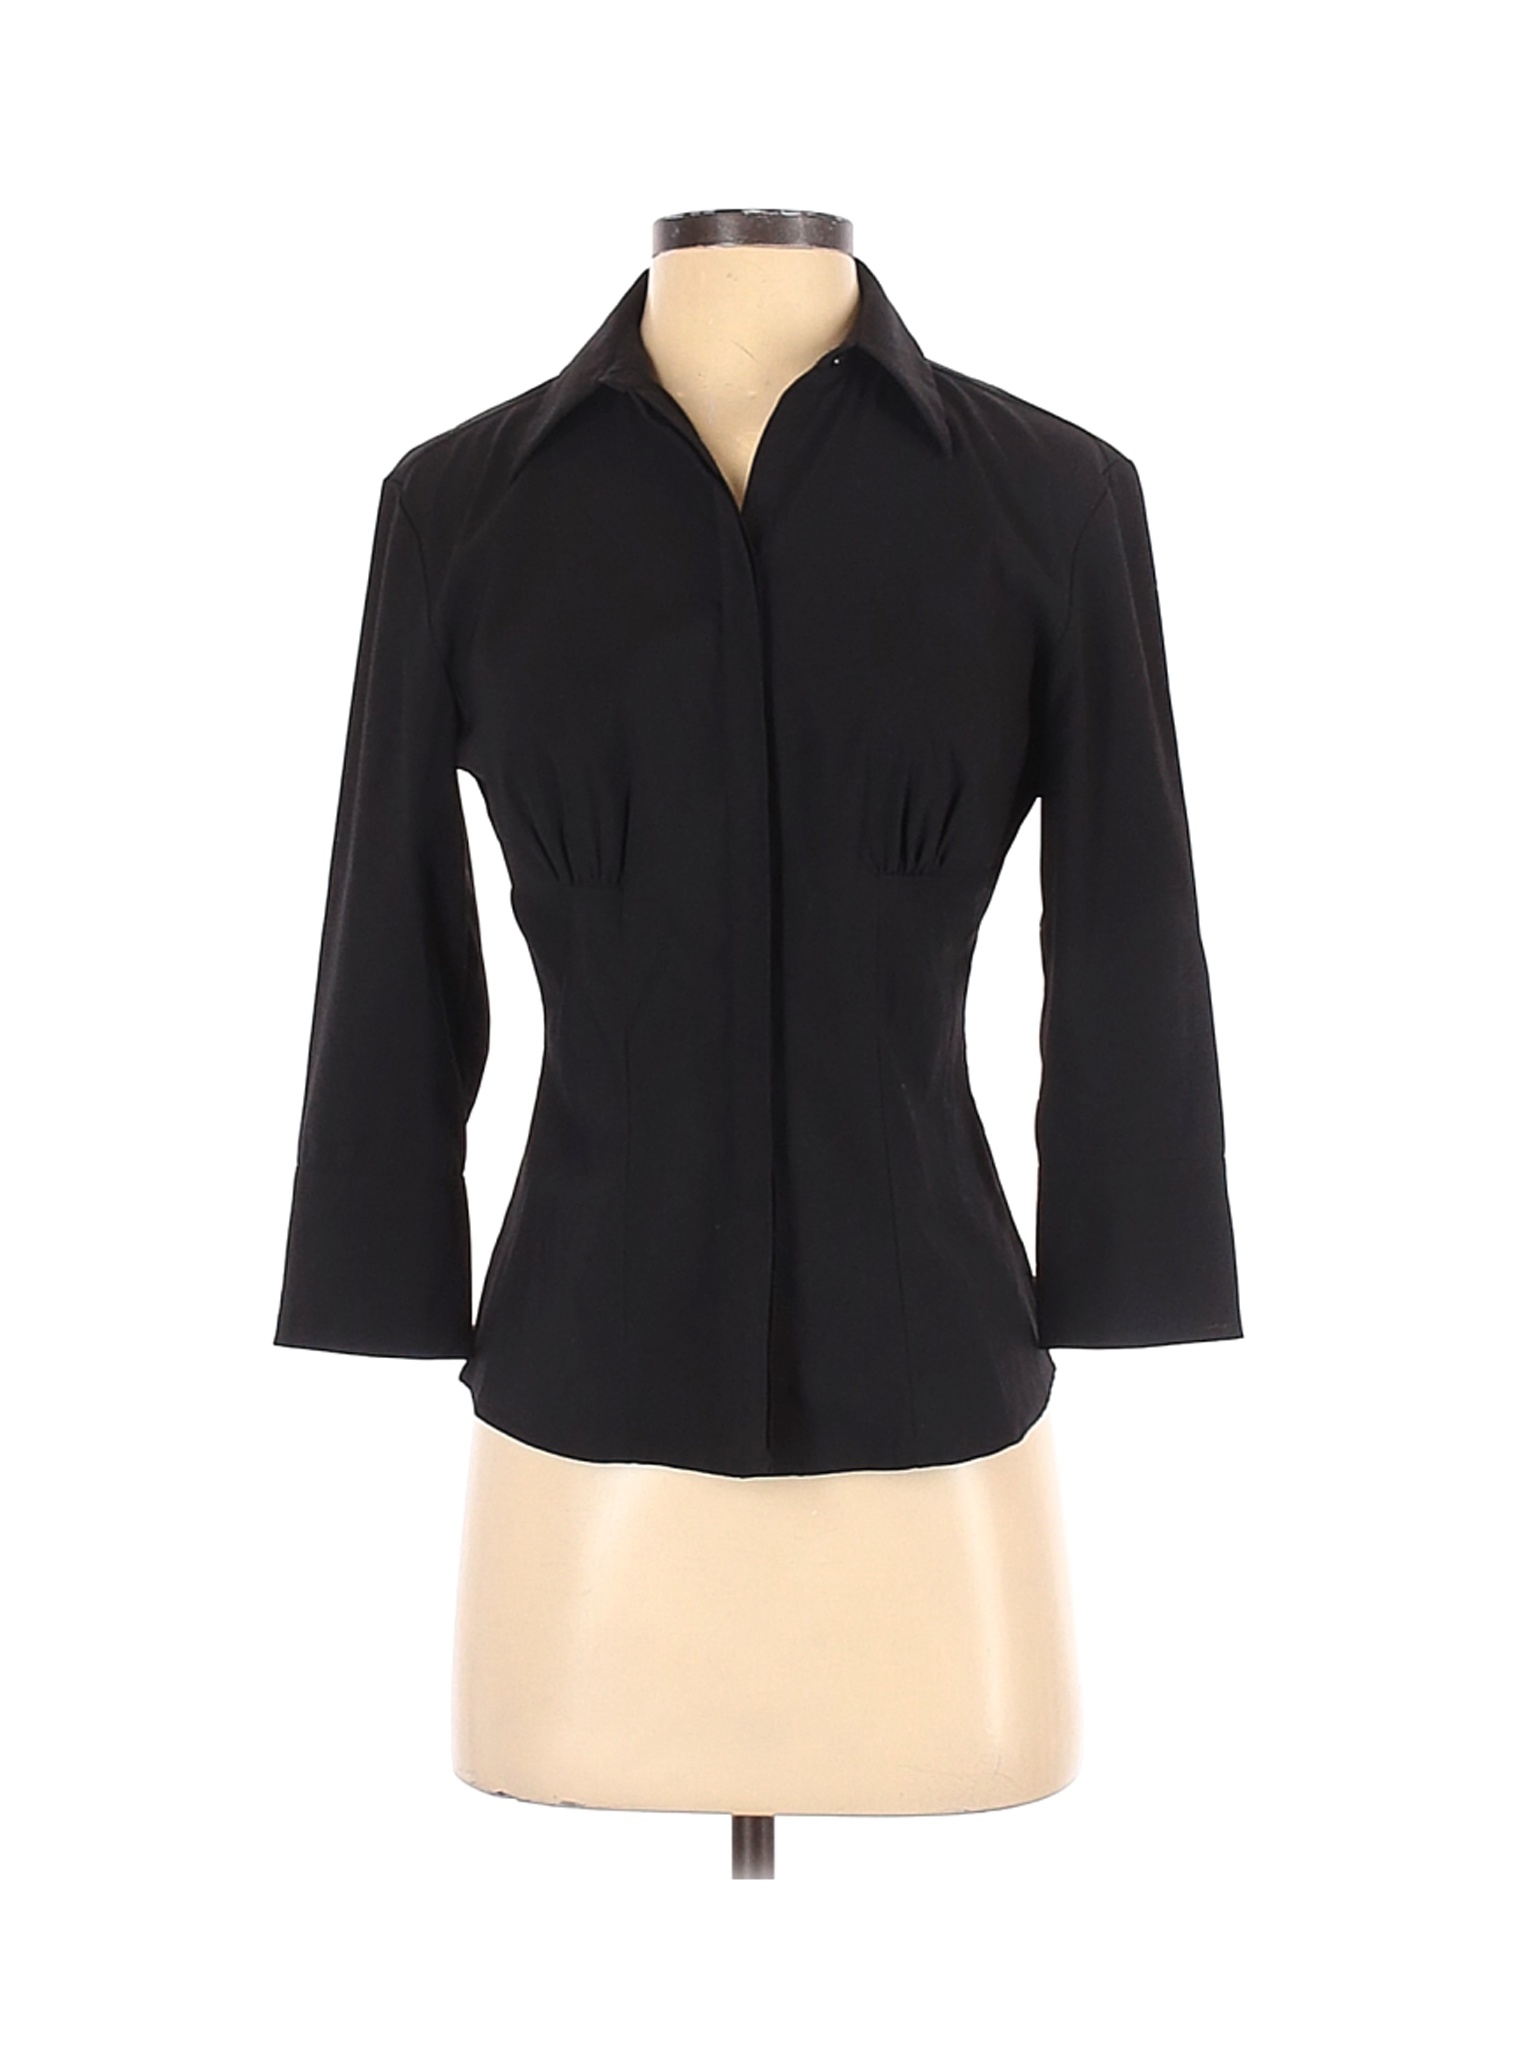 Express Women Black 3/4 Sleeve Blouse 2 | eBay